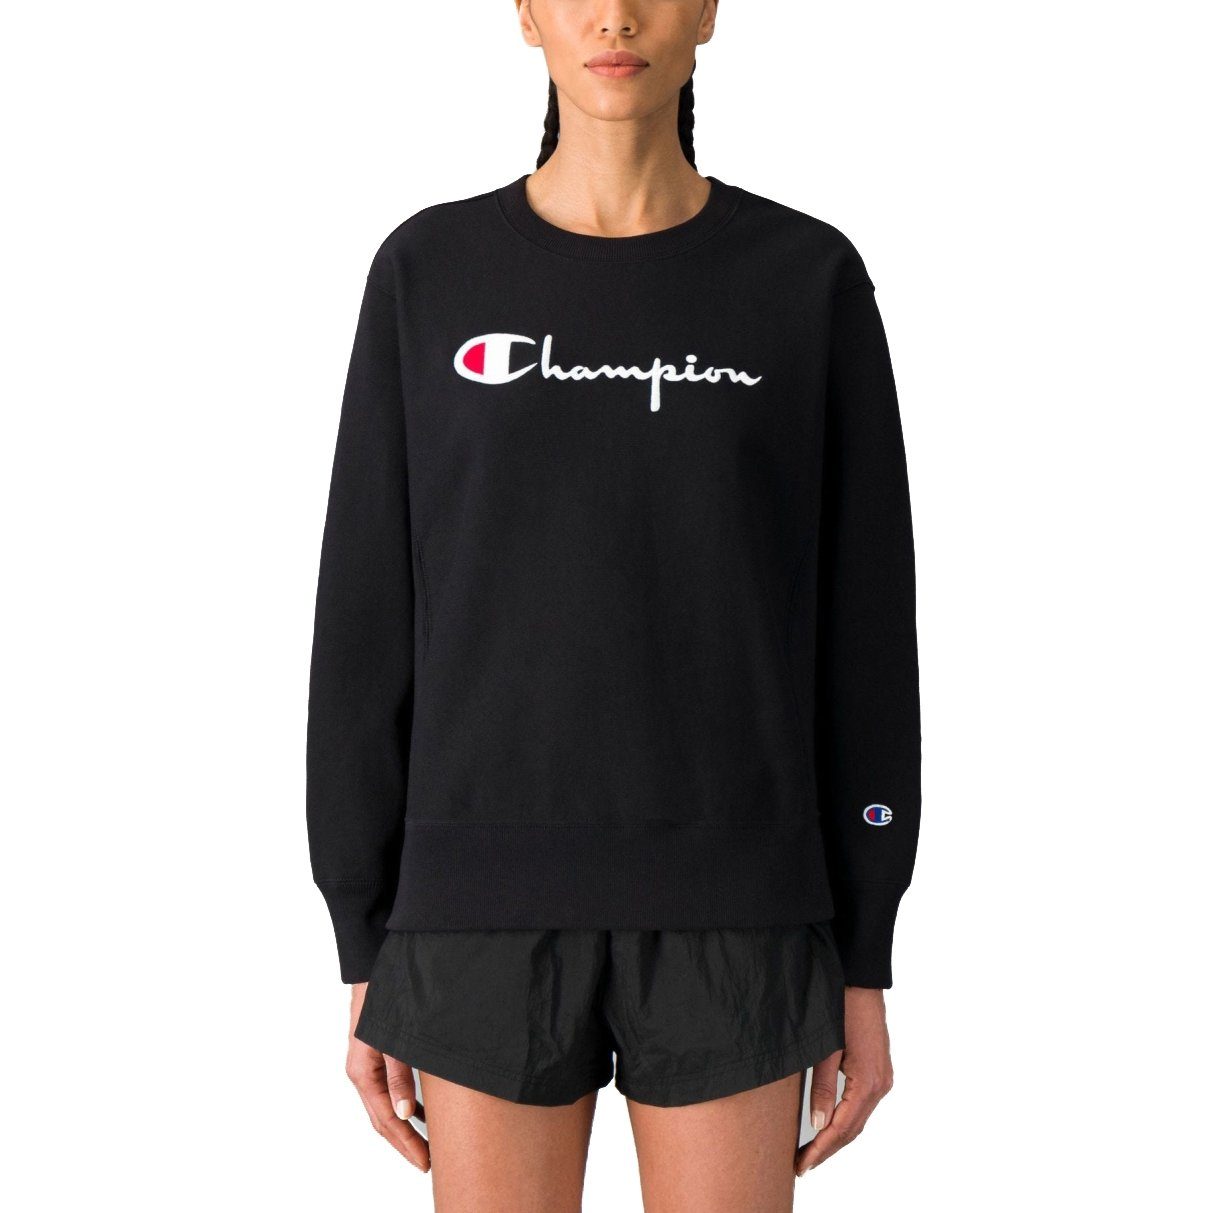 Champion Pullover online kaufen » Champion Pullis | OTTO